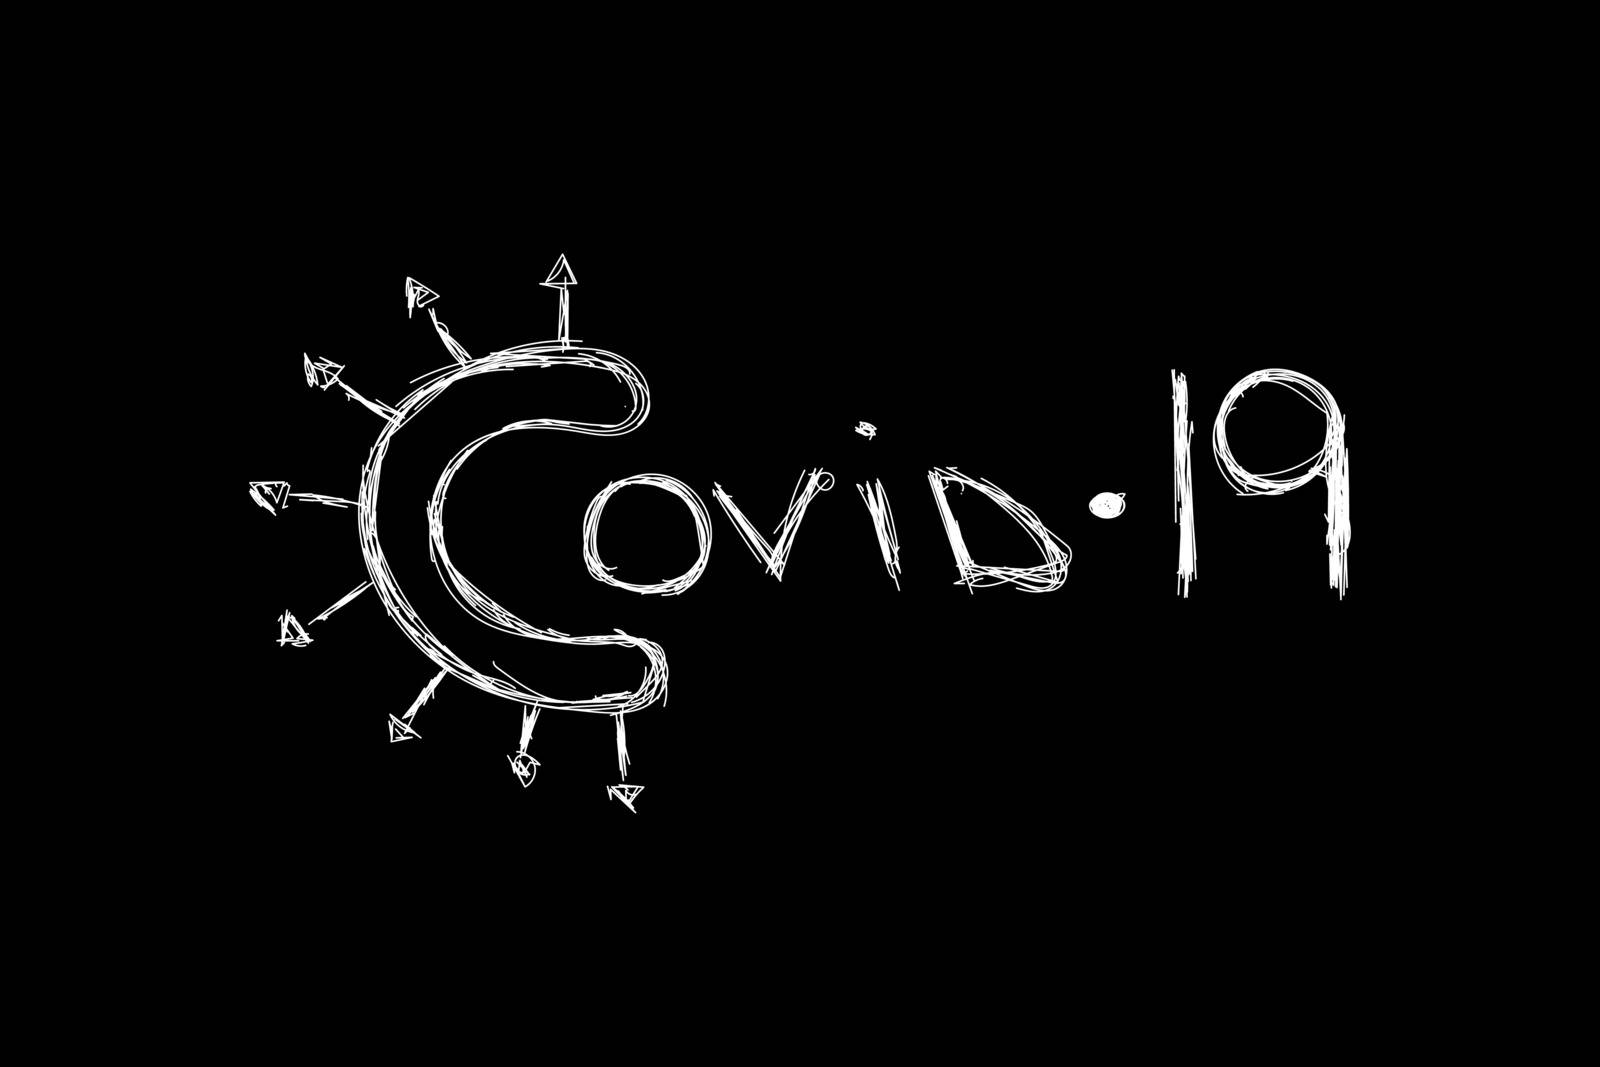 Covid 19 handdrawn logo. Coronavirus pandemic symbol inscription. EPS10 vector.